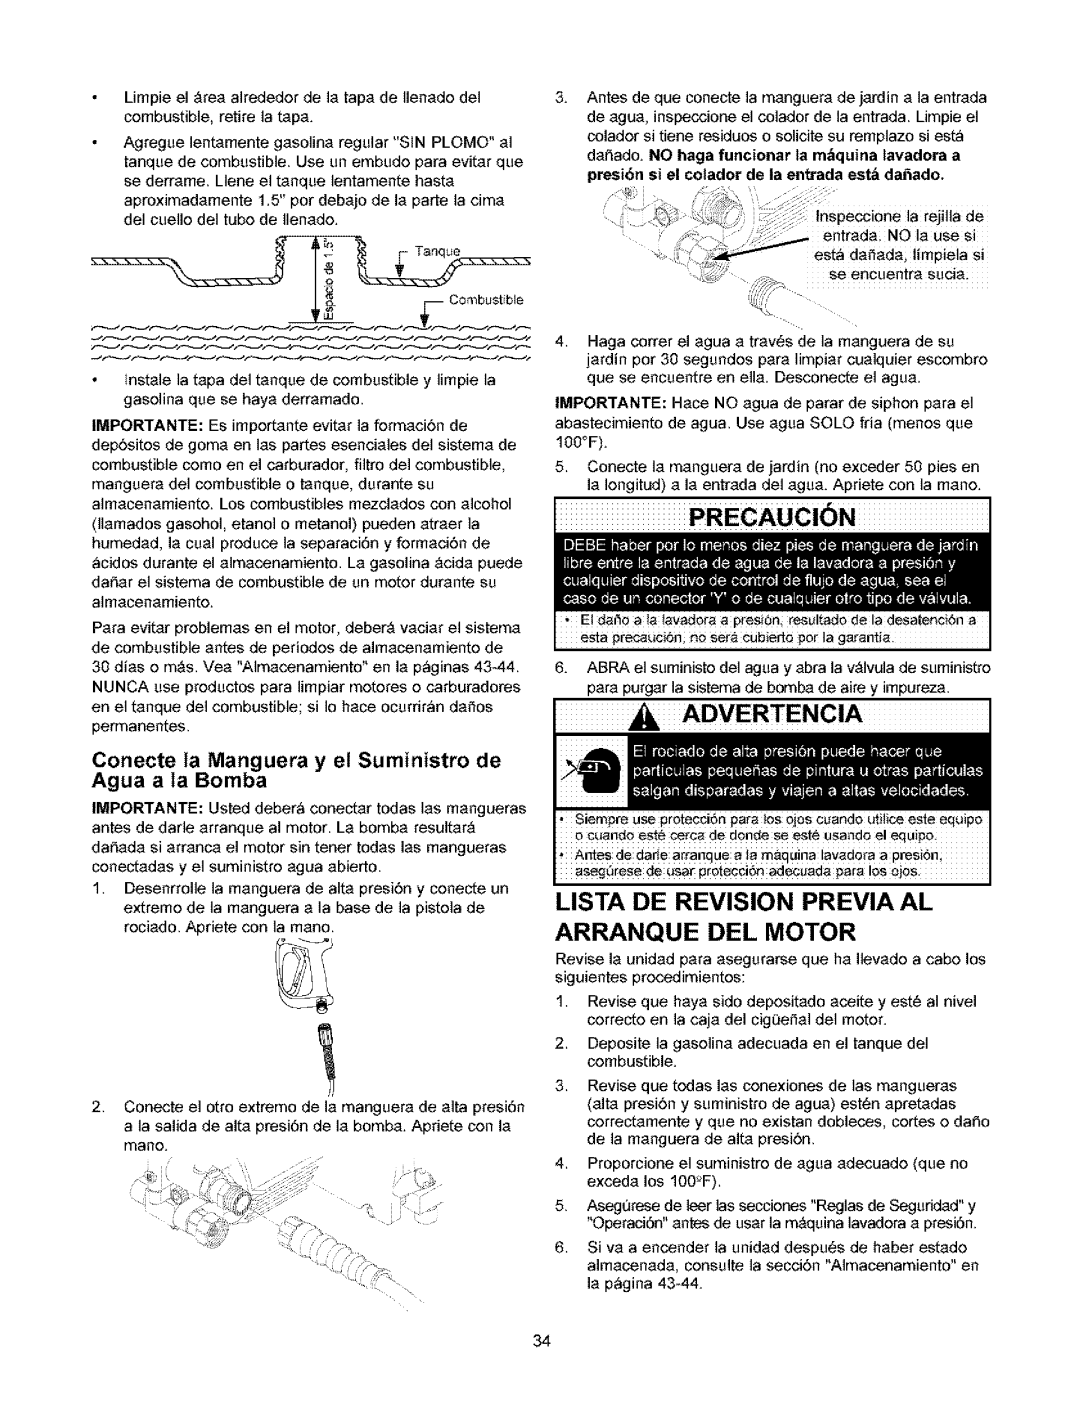 Craftsman 580.753 manual Lista De Revision Previa Al Arranque Del Motor, Precaucion 